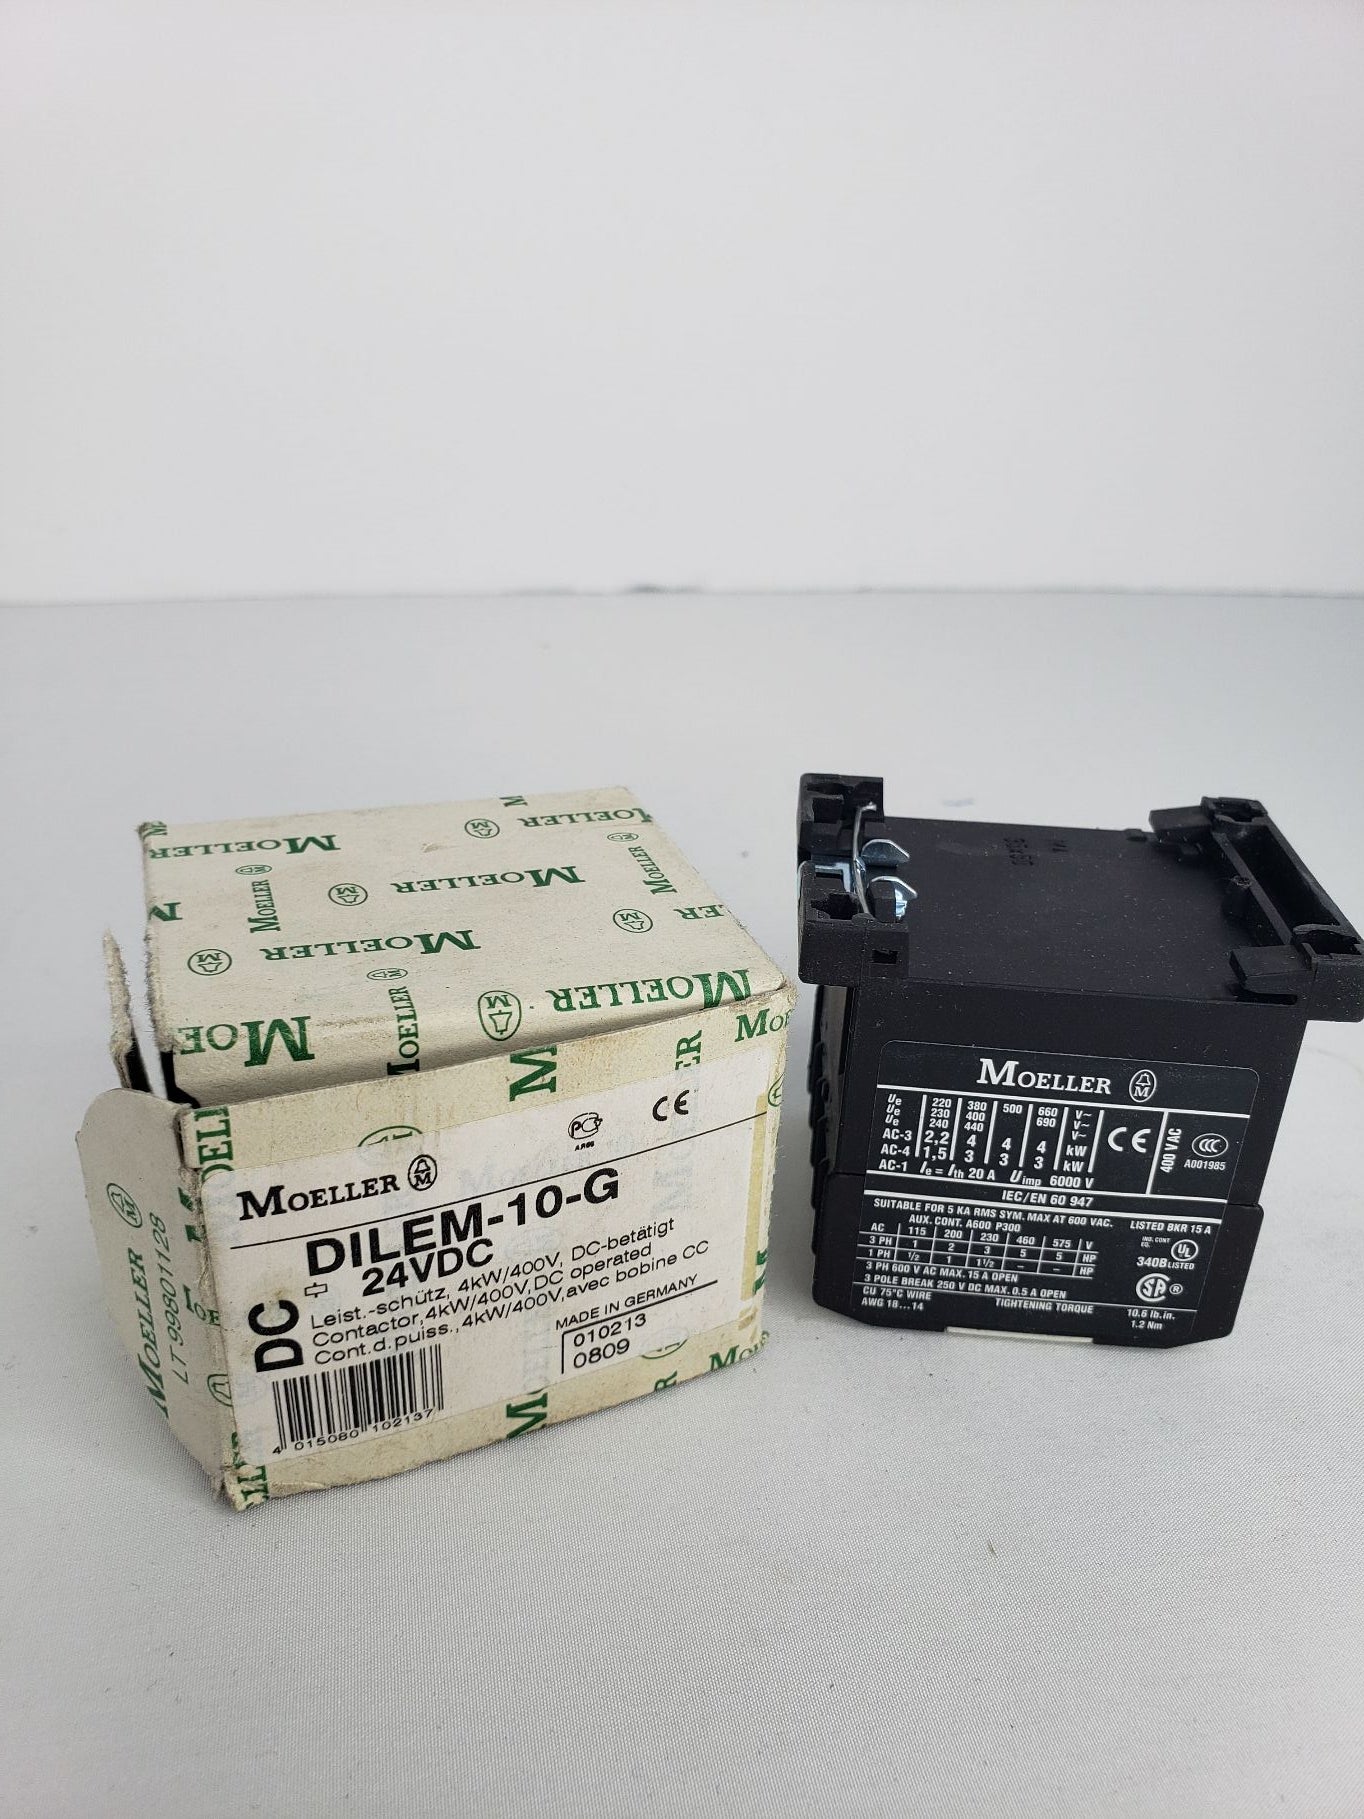 Moeller DILEM-10-G 3-pole, 15 AMP Miniature Contactor